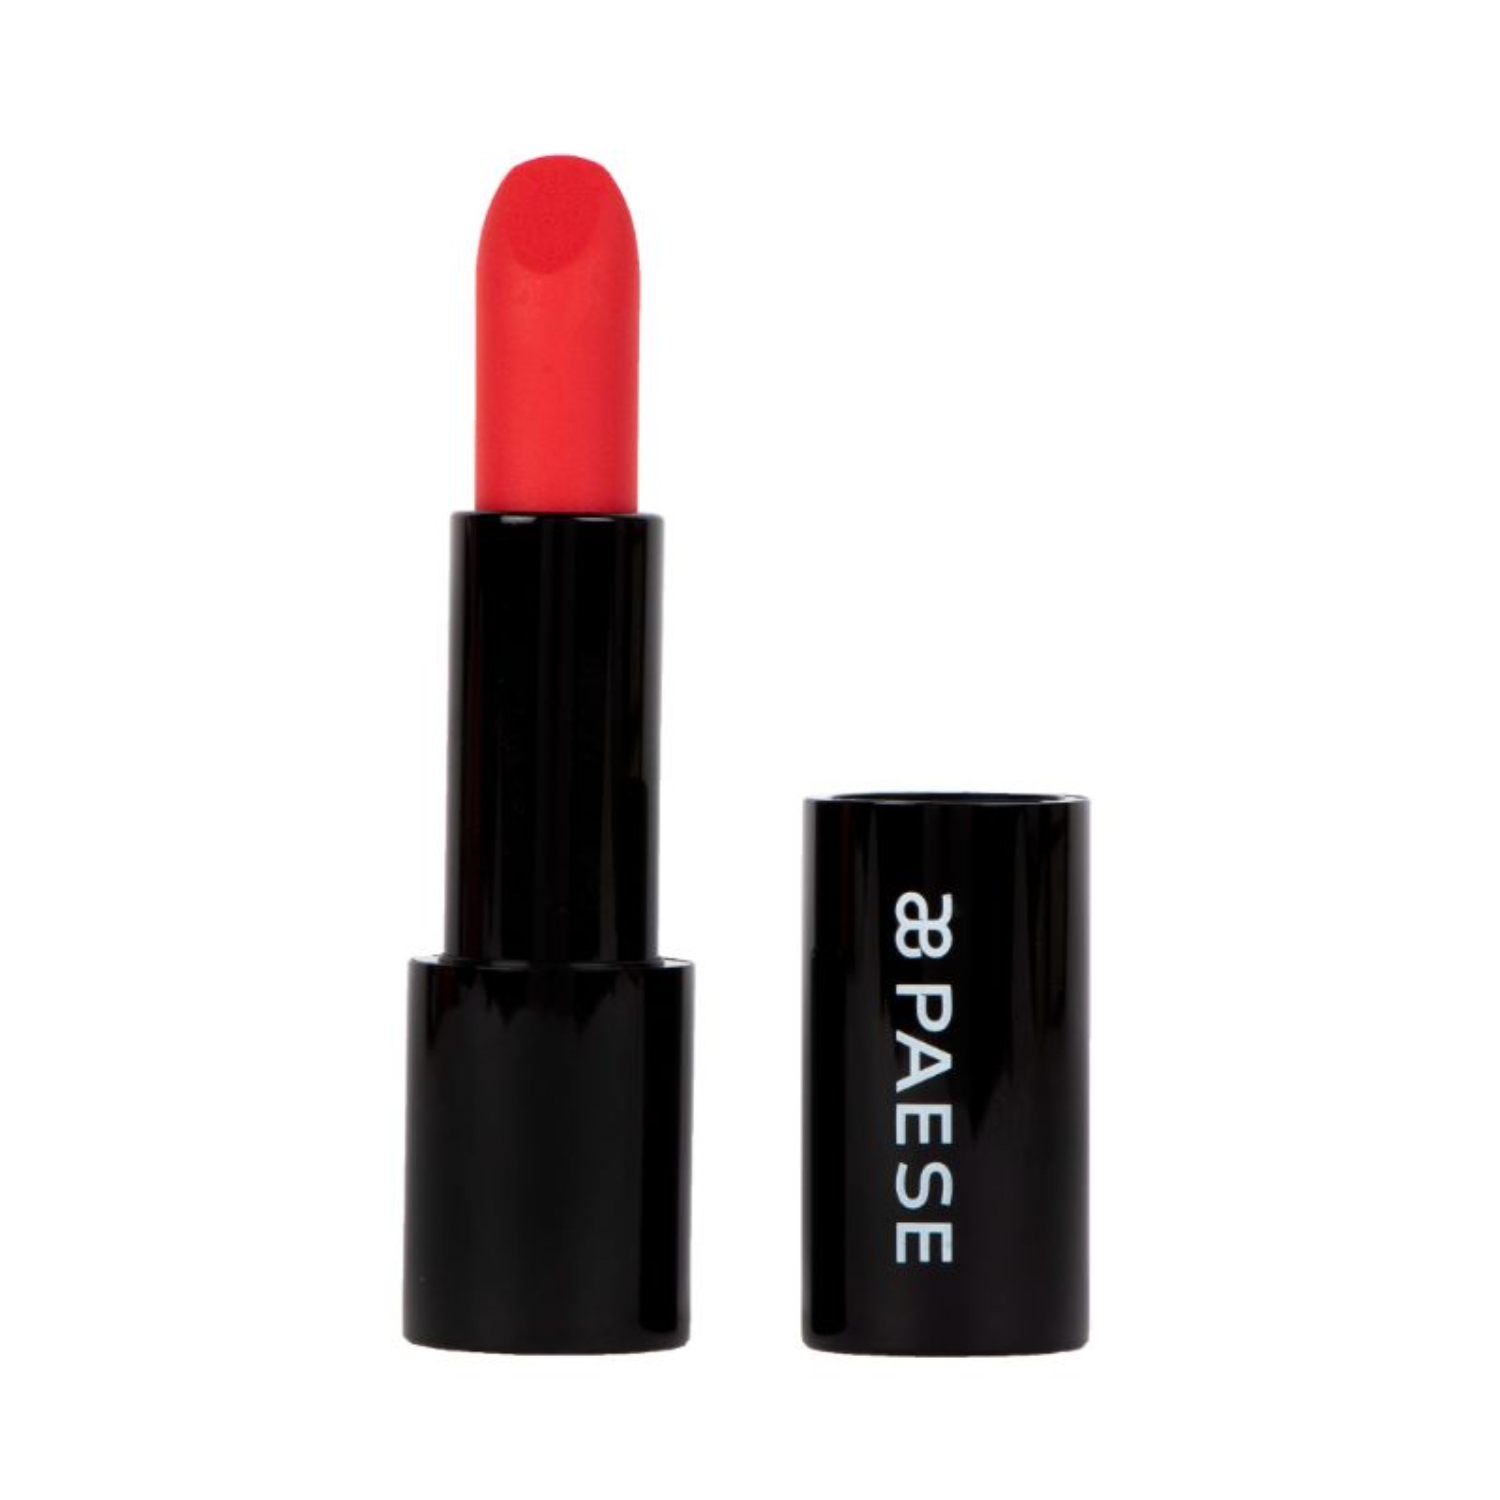 Paese Cosmetics | Paese Cosmetics Mattologie Lipstick - 111 Lava Red (4.3g)